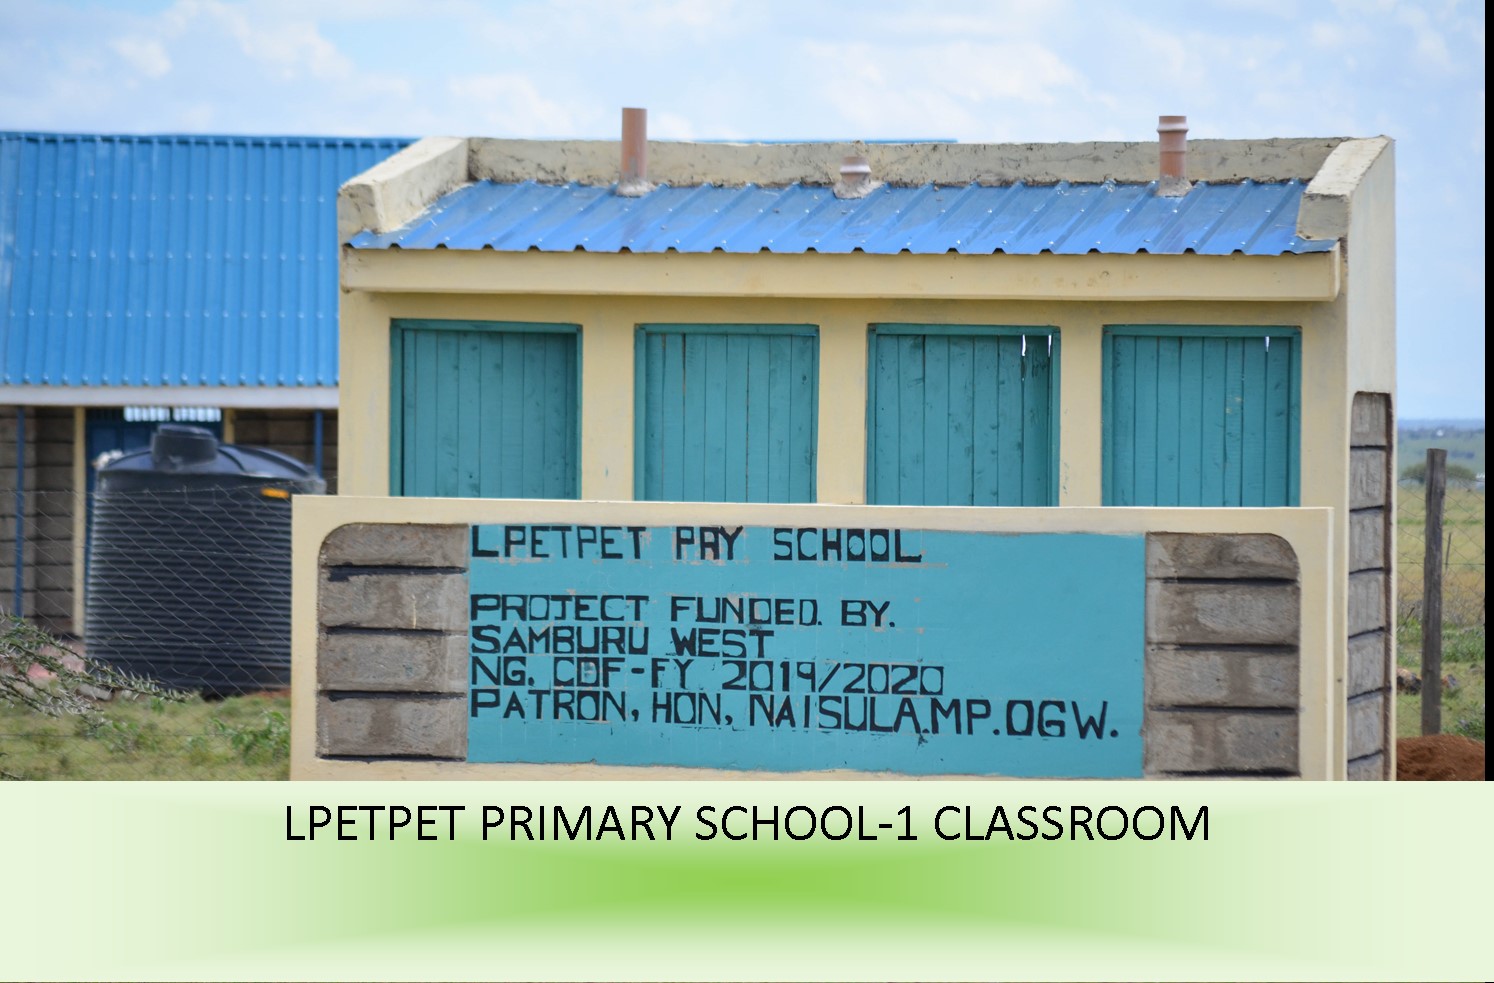 https://samburu-west.ngcdf.go.ke/wp-content/uploads/2021/08/lpetpet-primary-school-1-classroom.jpg